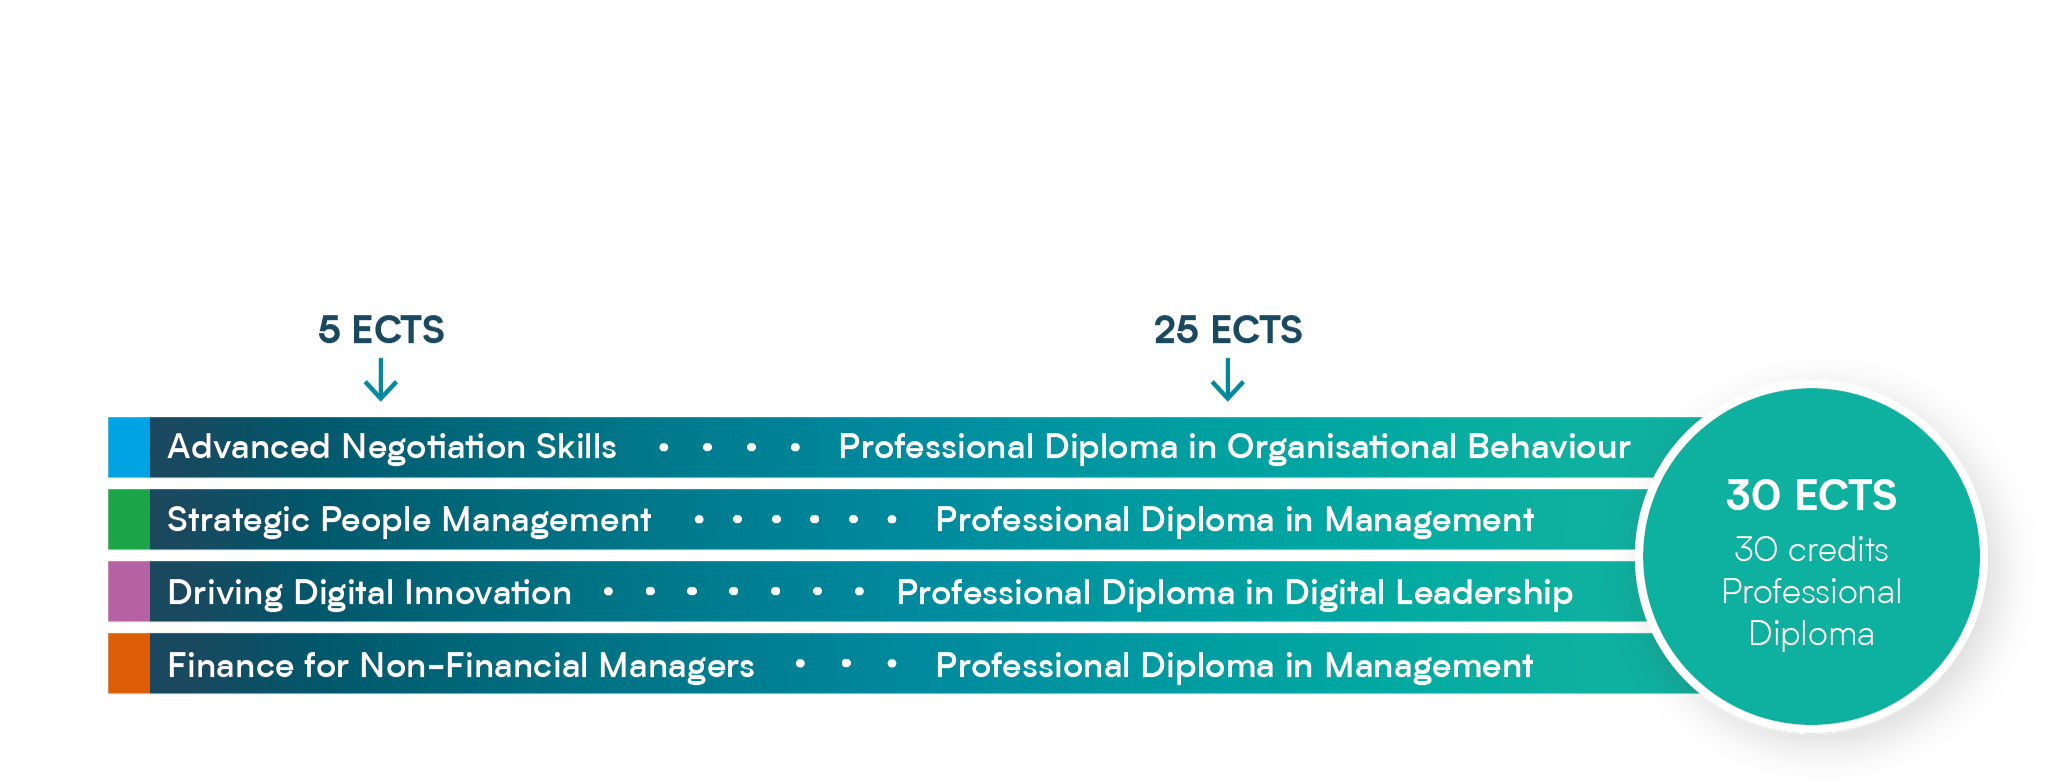 Professional Diploma Pathway